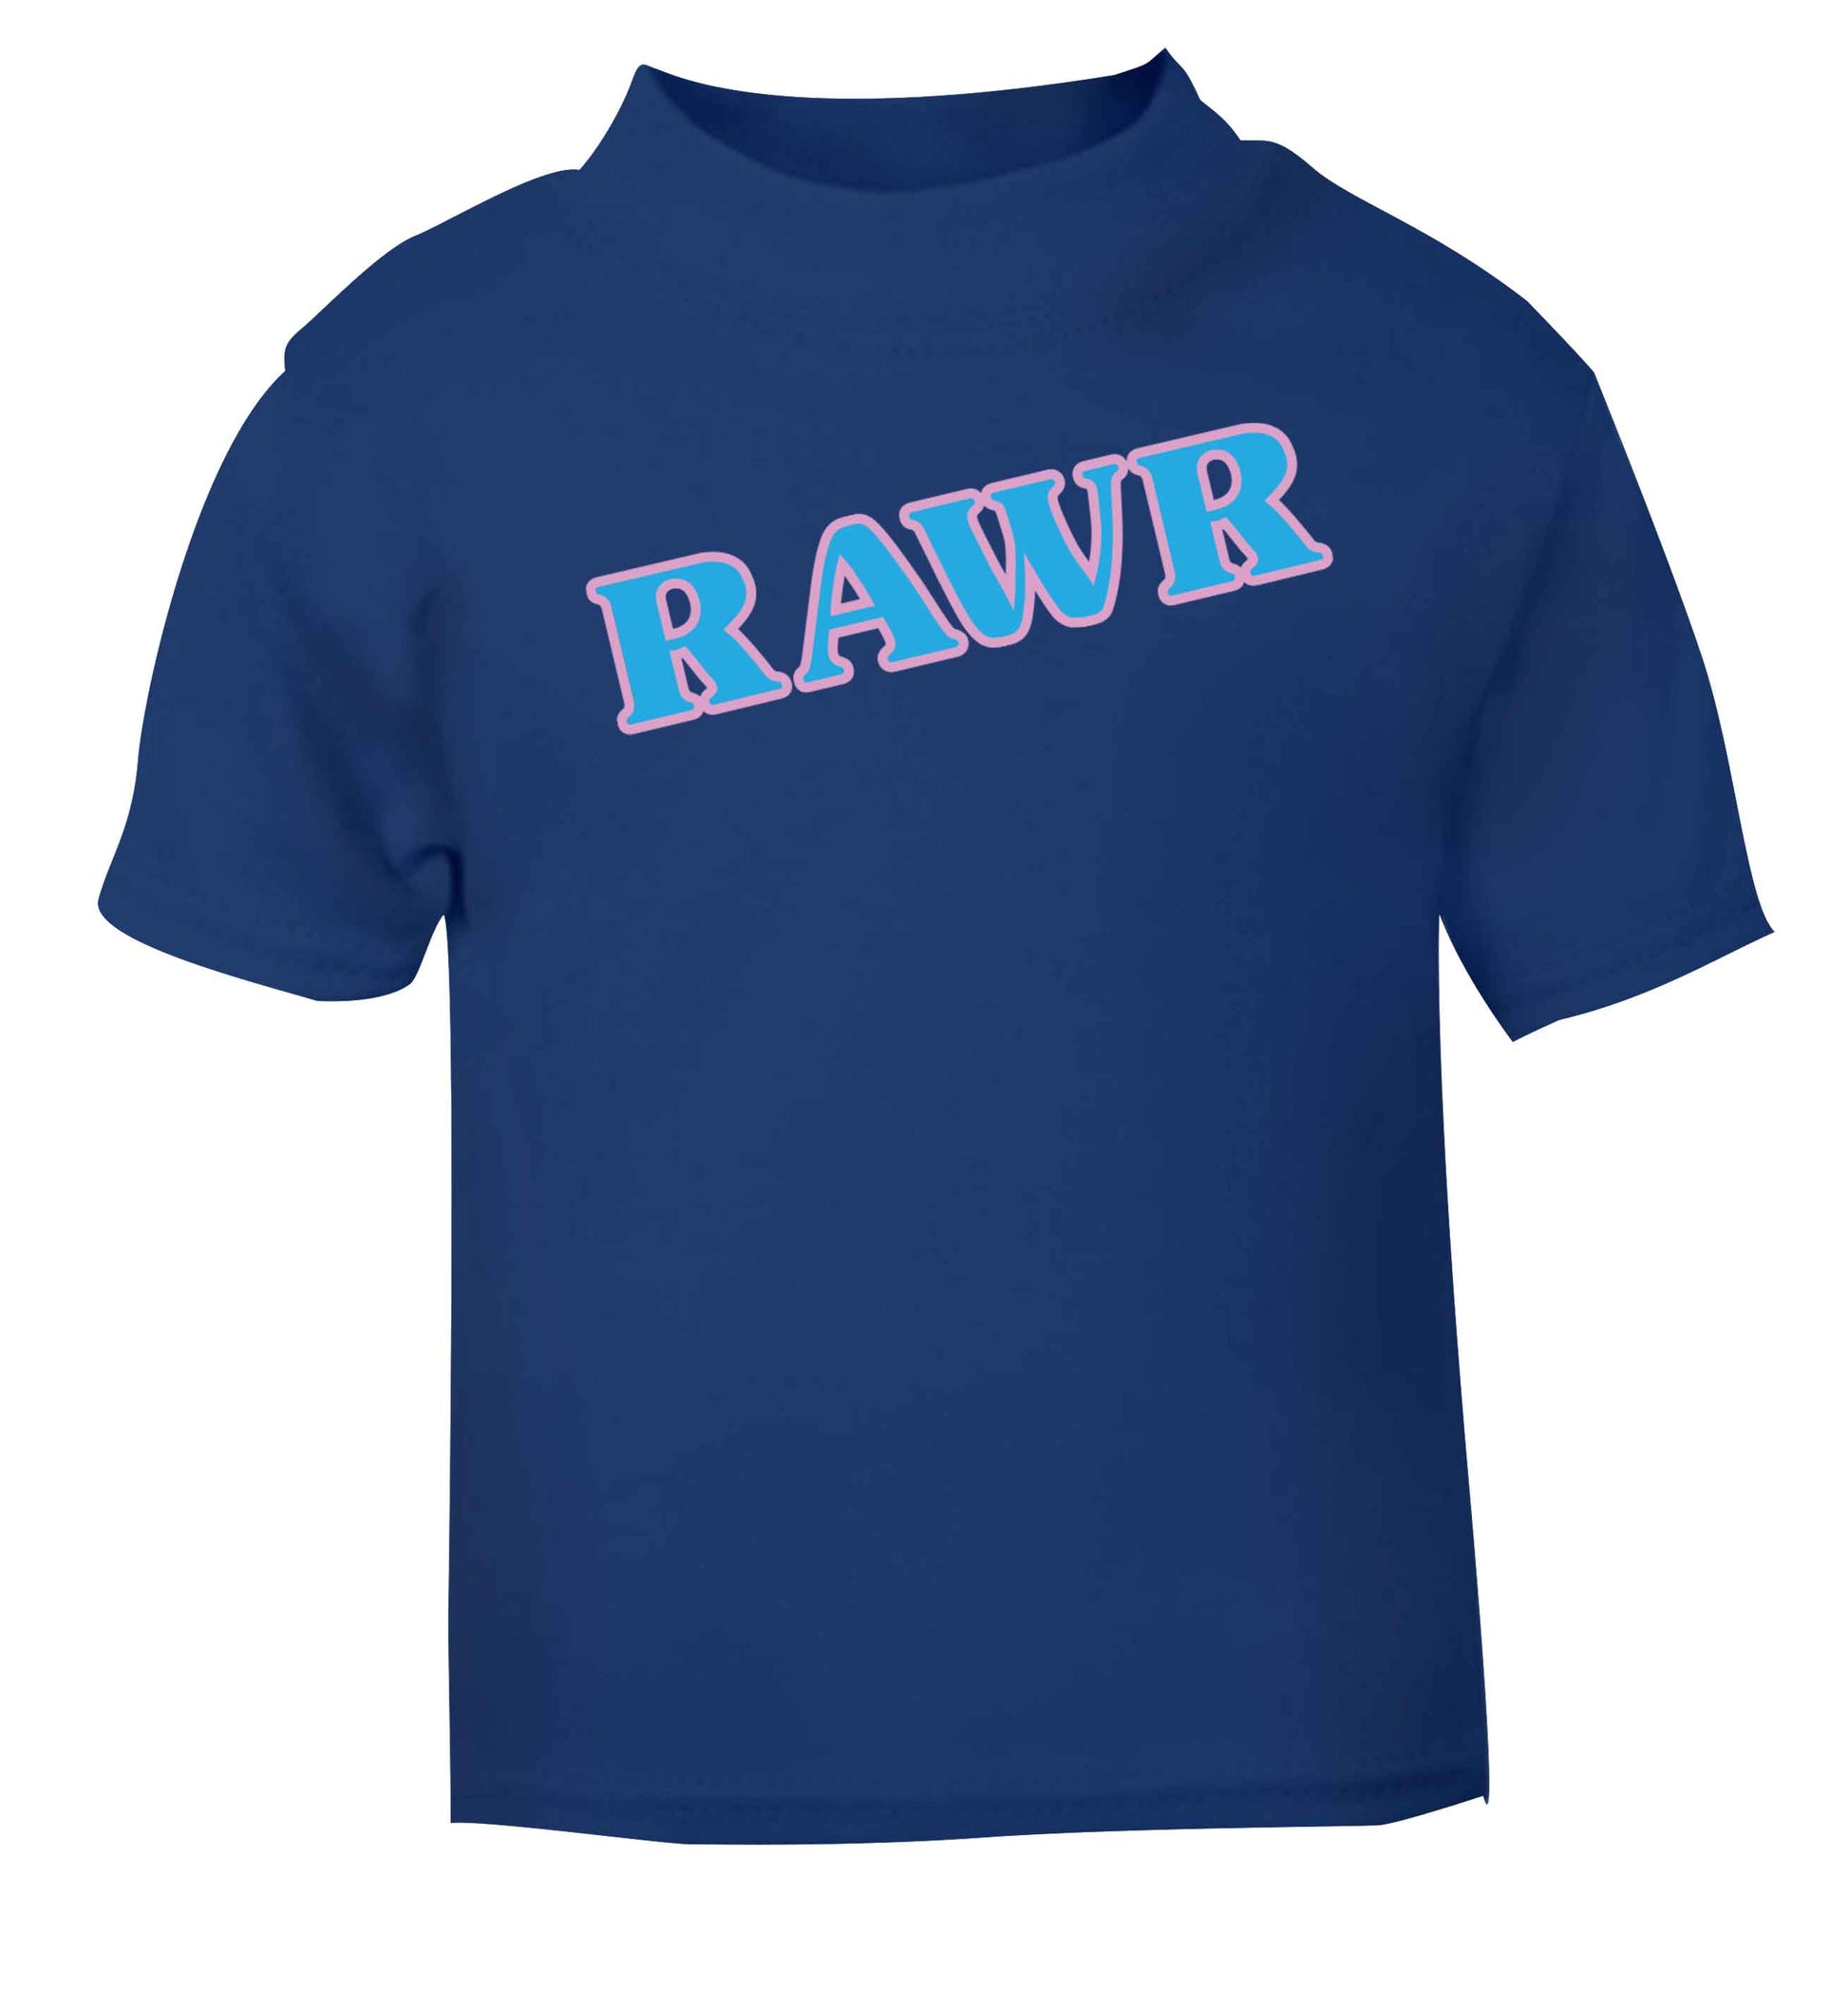 Rawr blue baby toddler Tshirt 2 Years